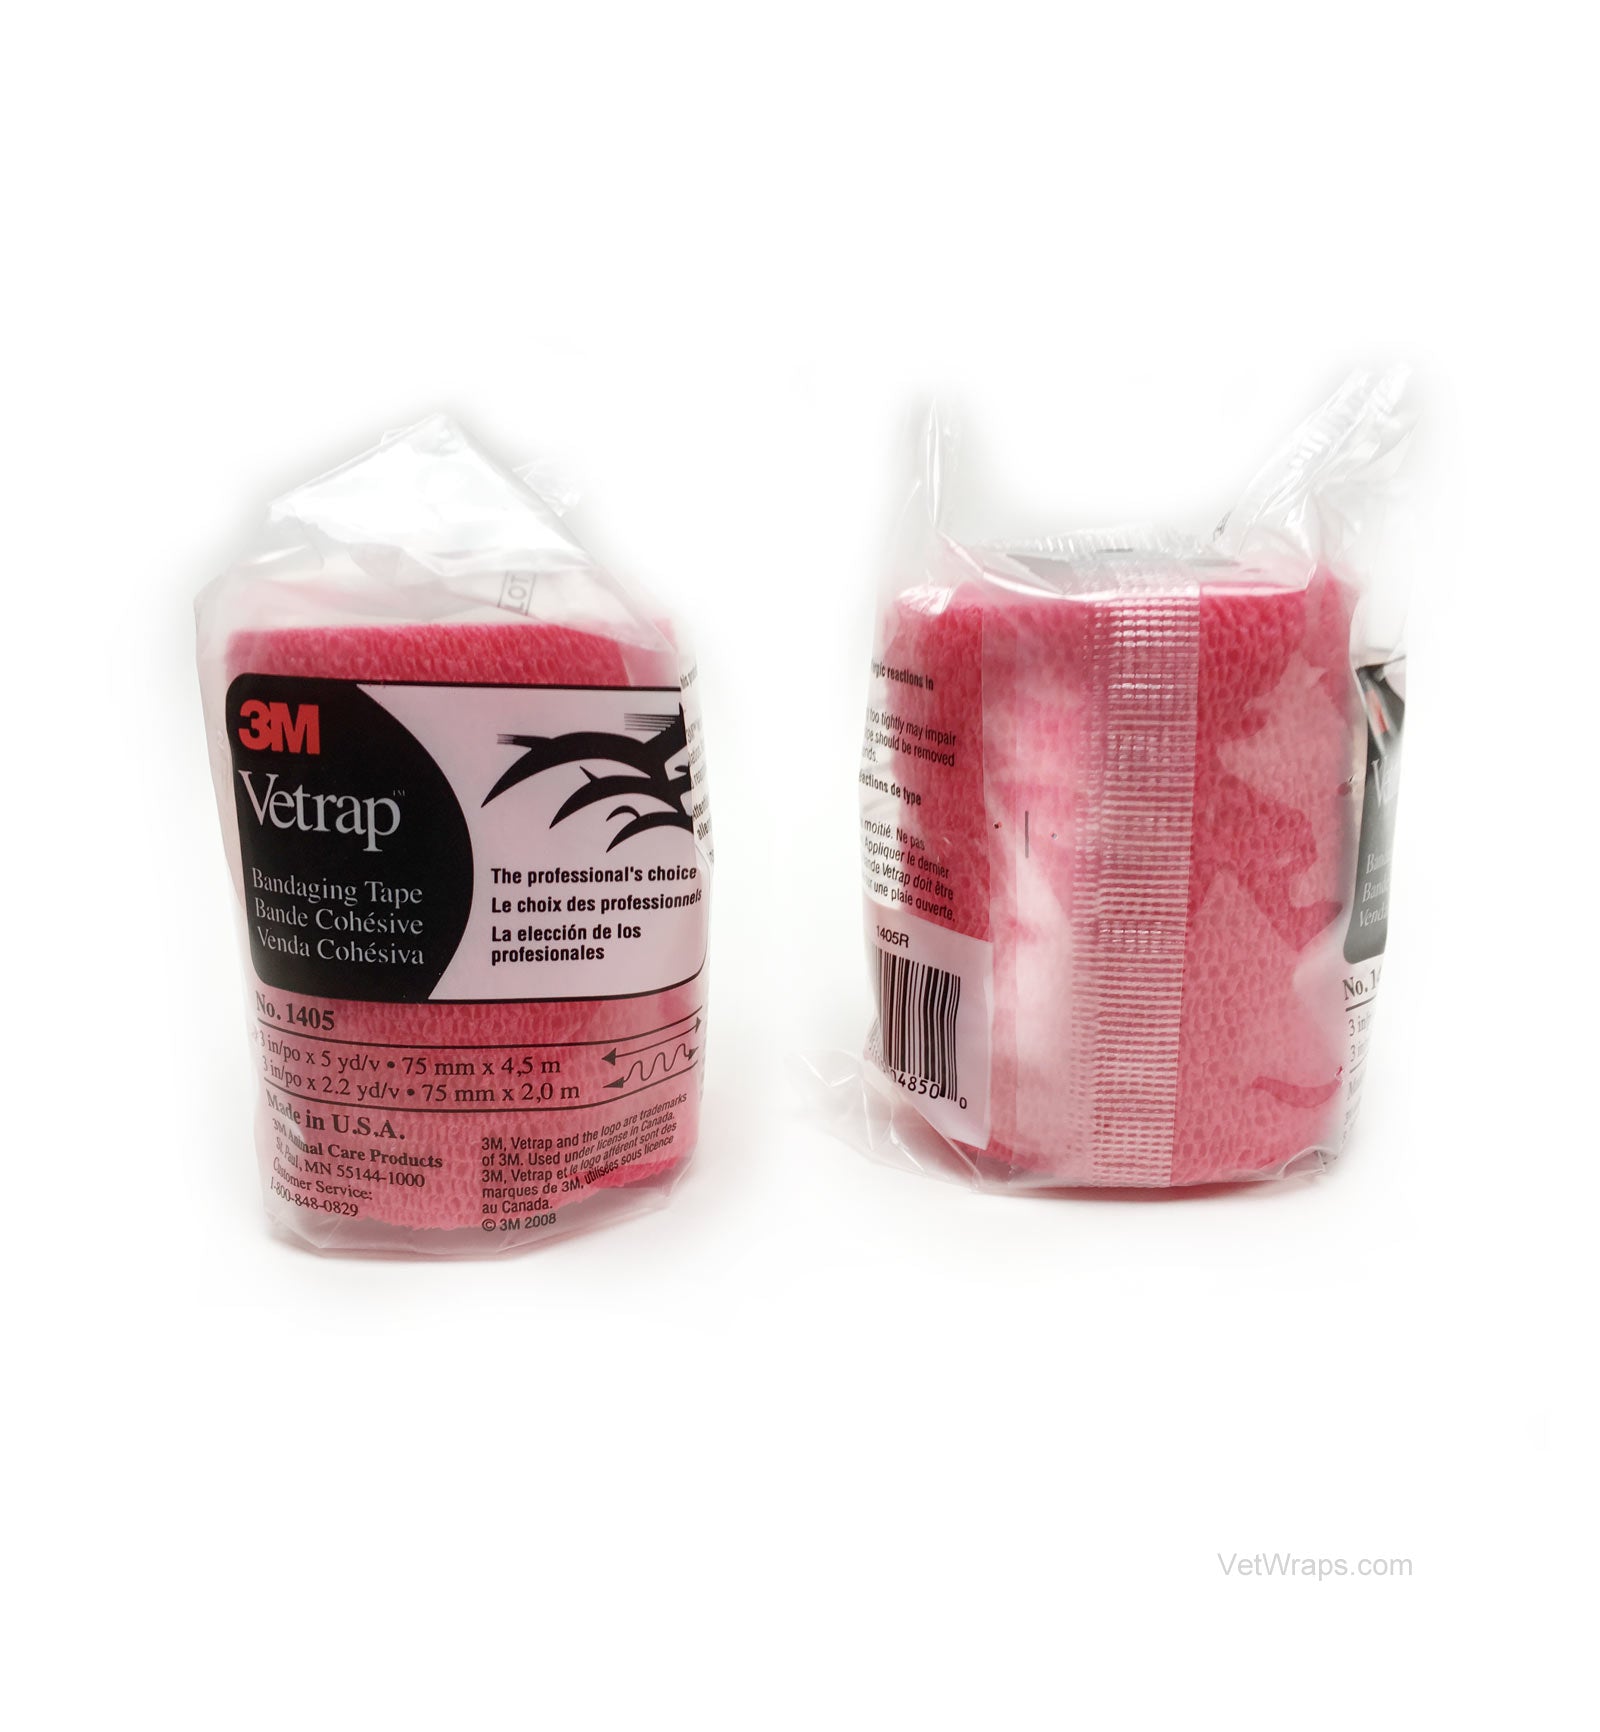 3M Vetrap Bandaging Tape 1405 3 Inch (Red Rolls)